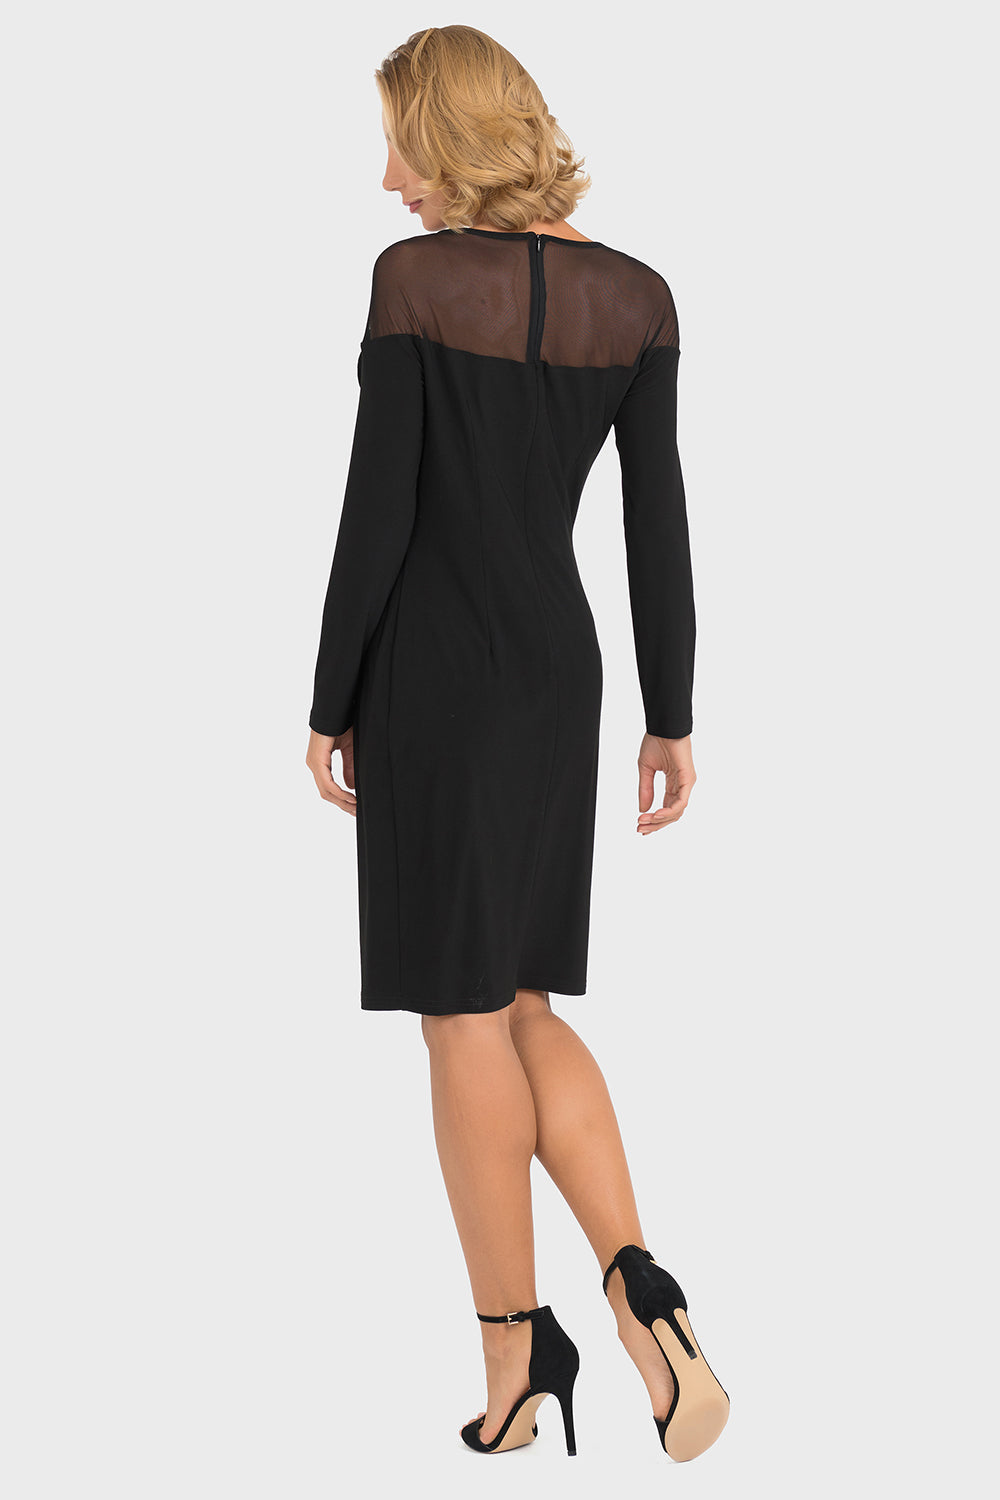 Joseph Ribkoff Black Dress Style 193297